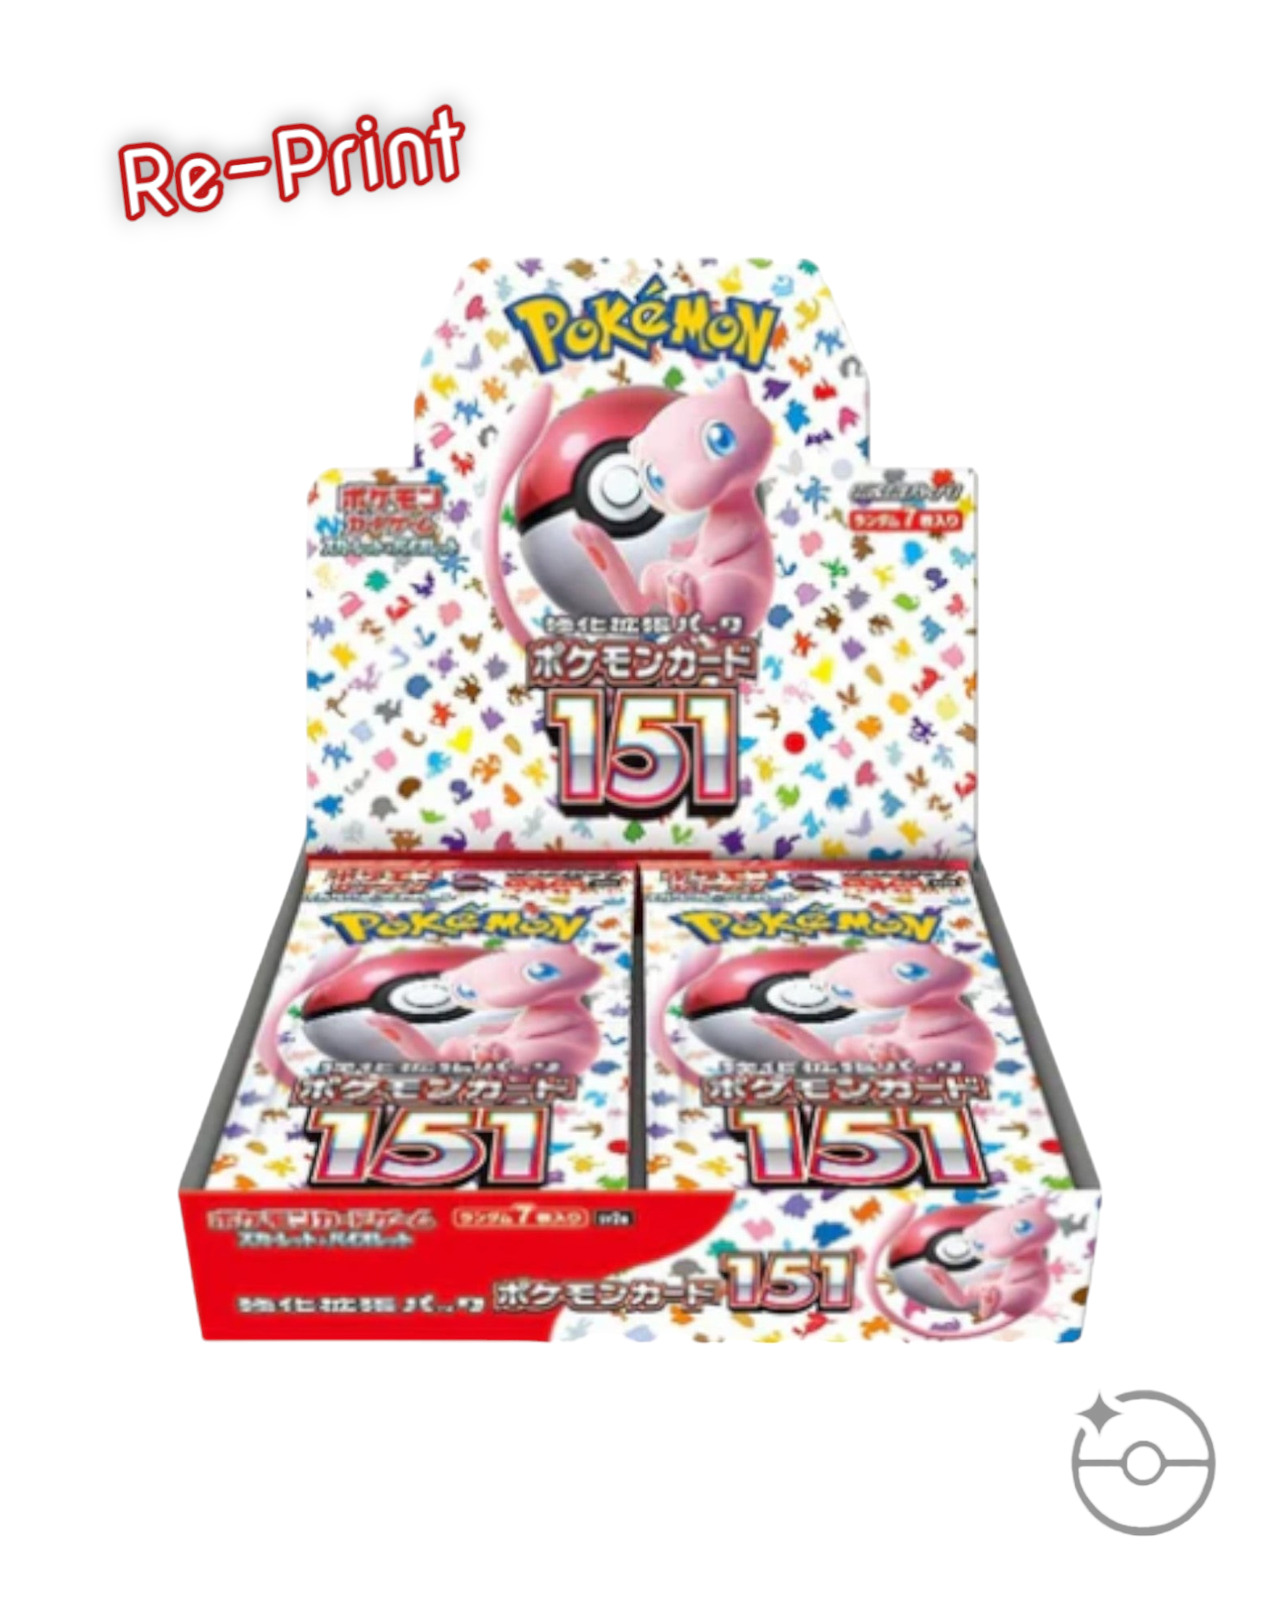 Scarlet & Violet - Pokémon 151 Booster Box Reprint (Japanese) Ships 4/21 & 4/24